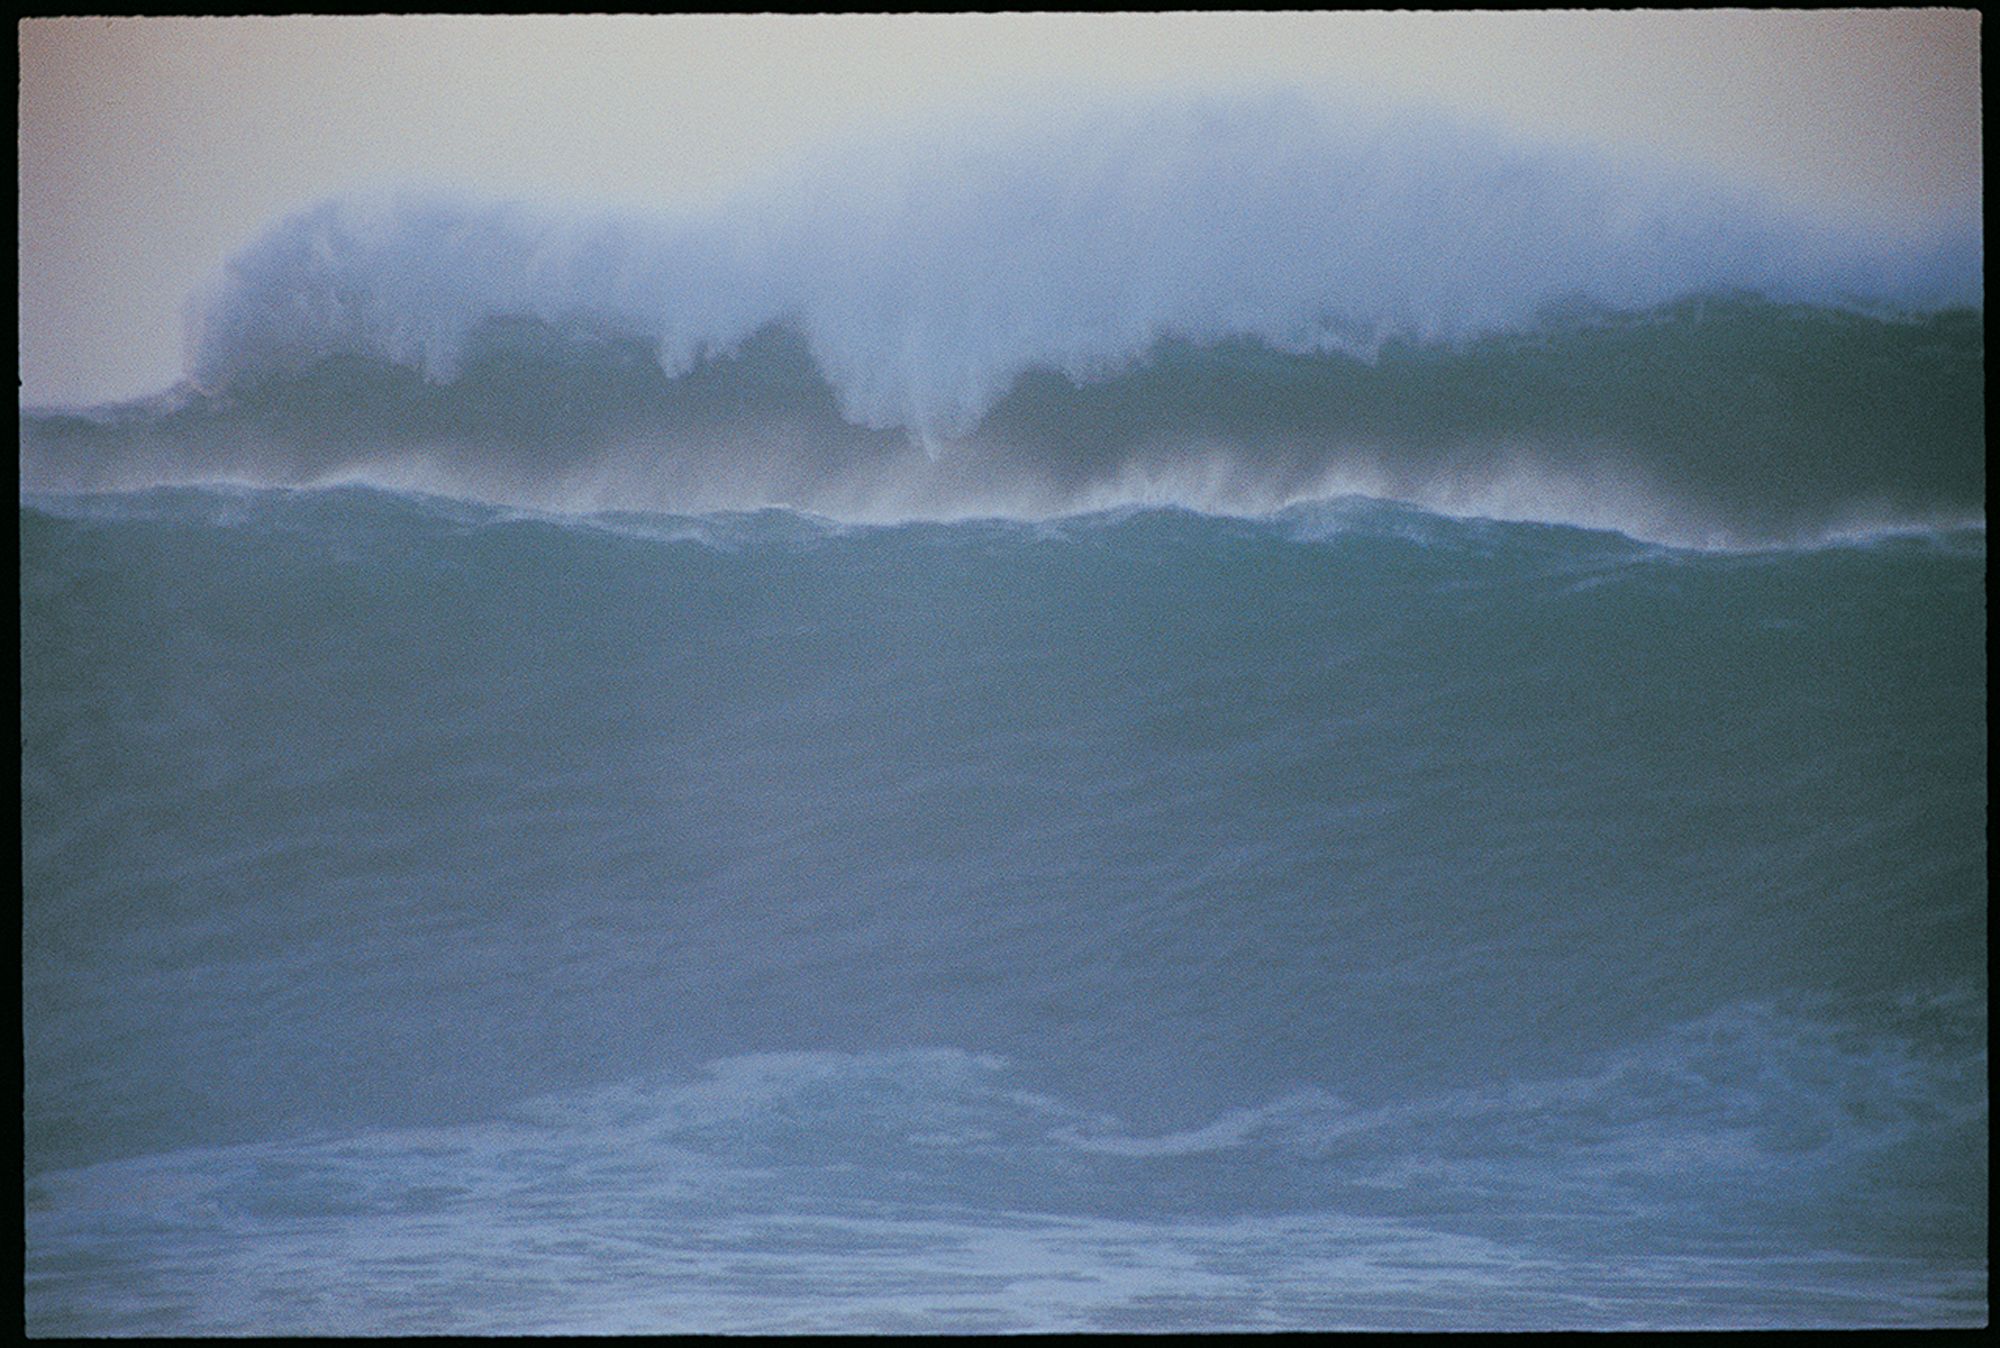 full frame print of a massive wave